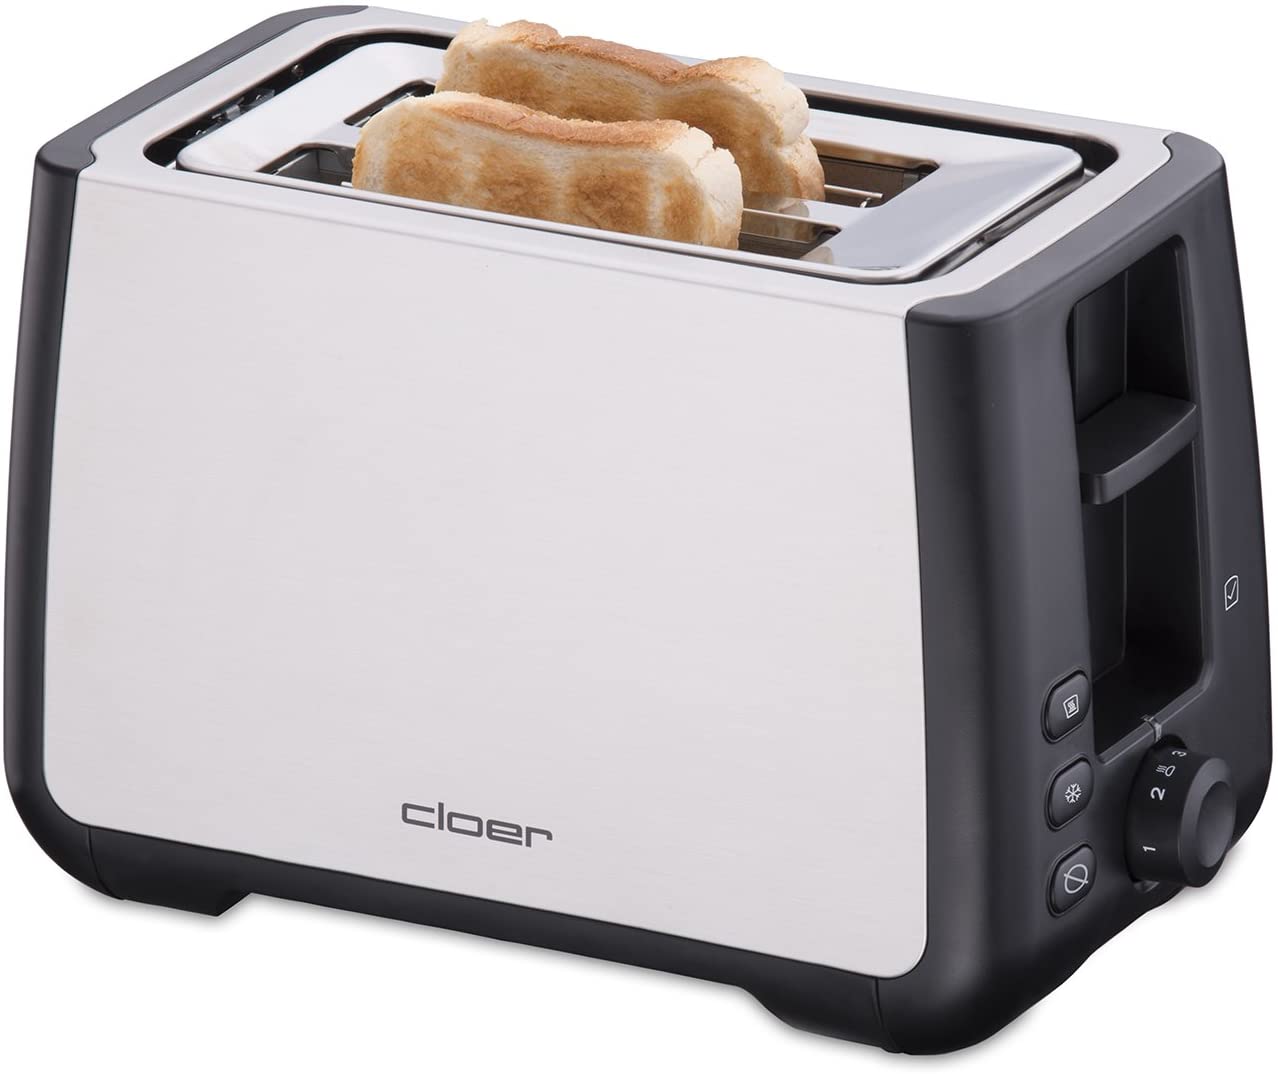 Cloer 3569 King Size Toaster for 2 XXL Slices/Check Function/Stainless Steel Housing/1000 Watt/Black Plastic